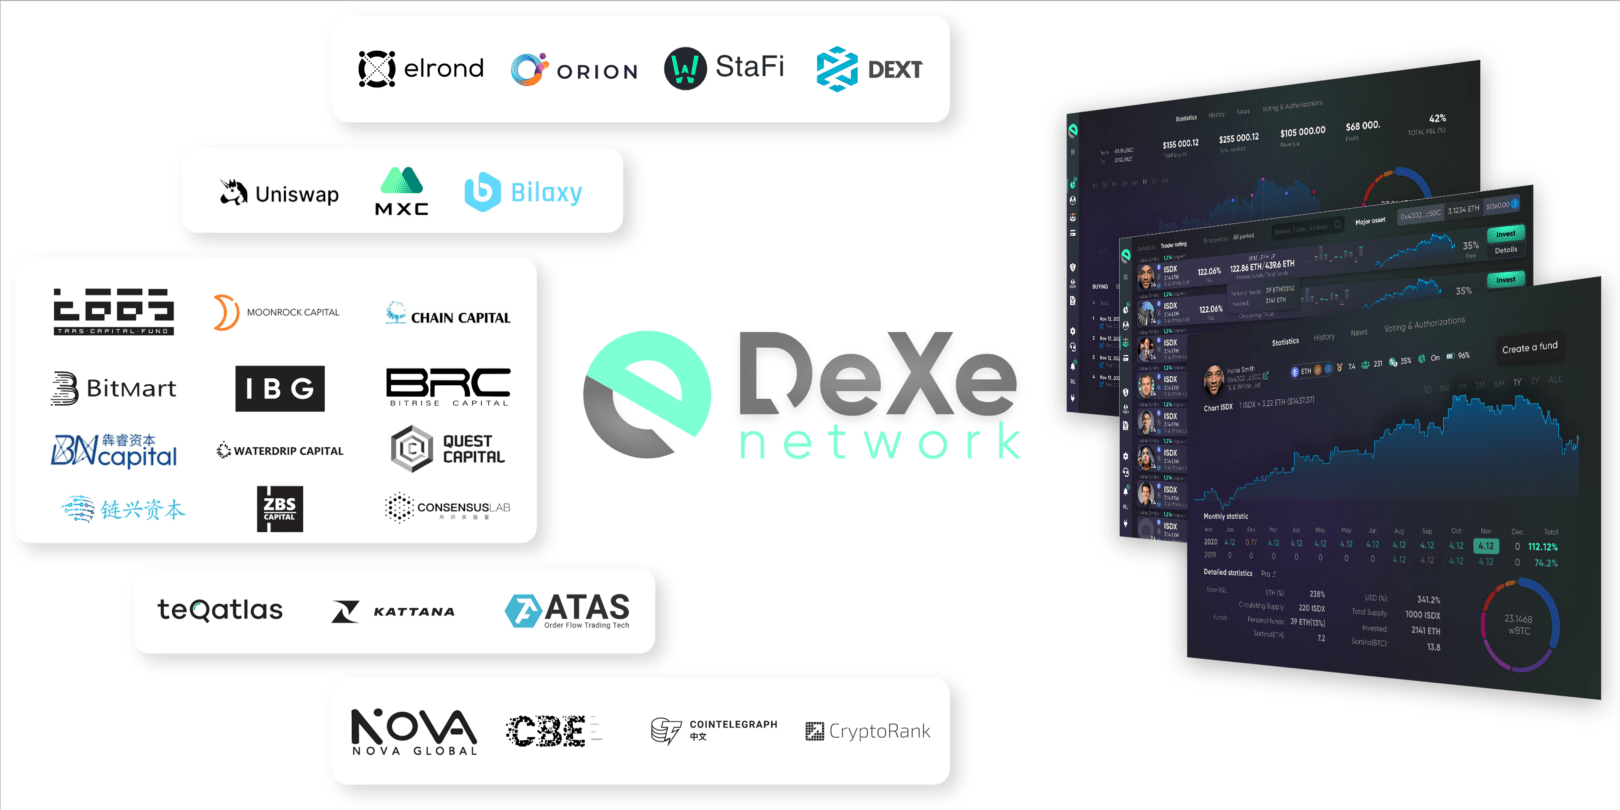 dexe network partnership